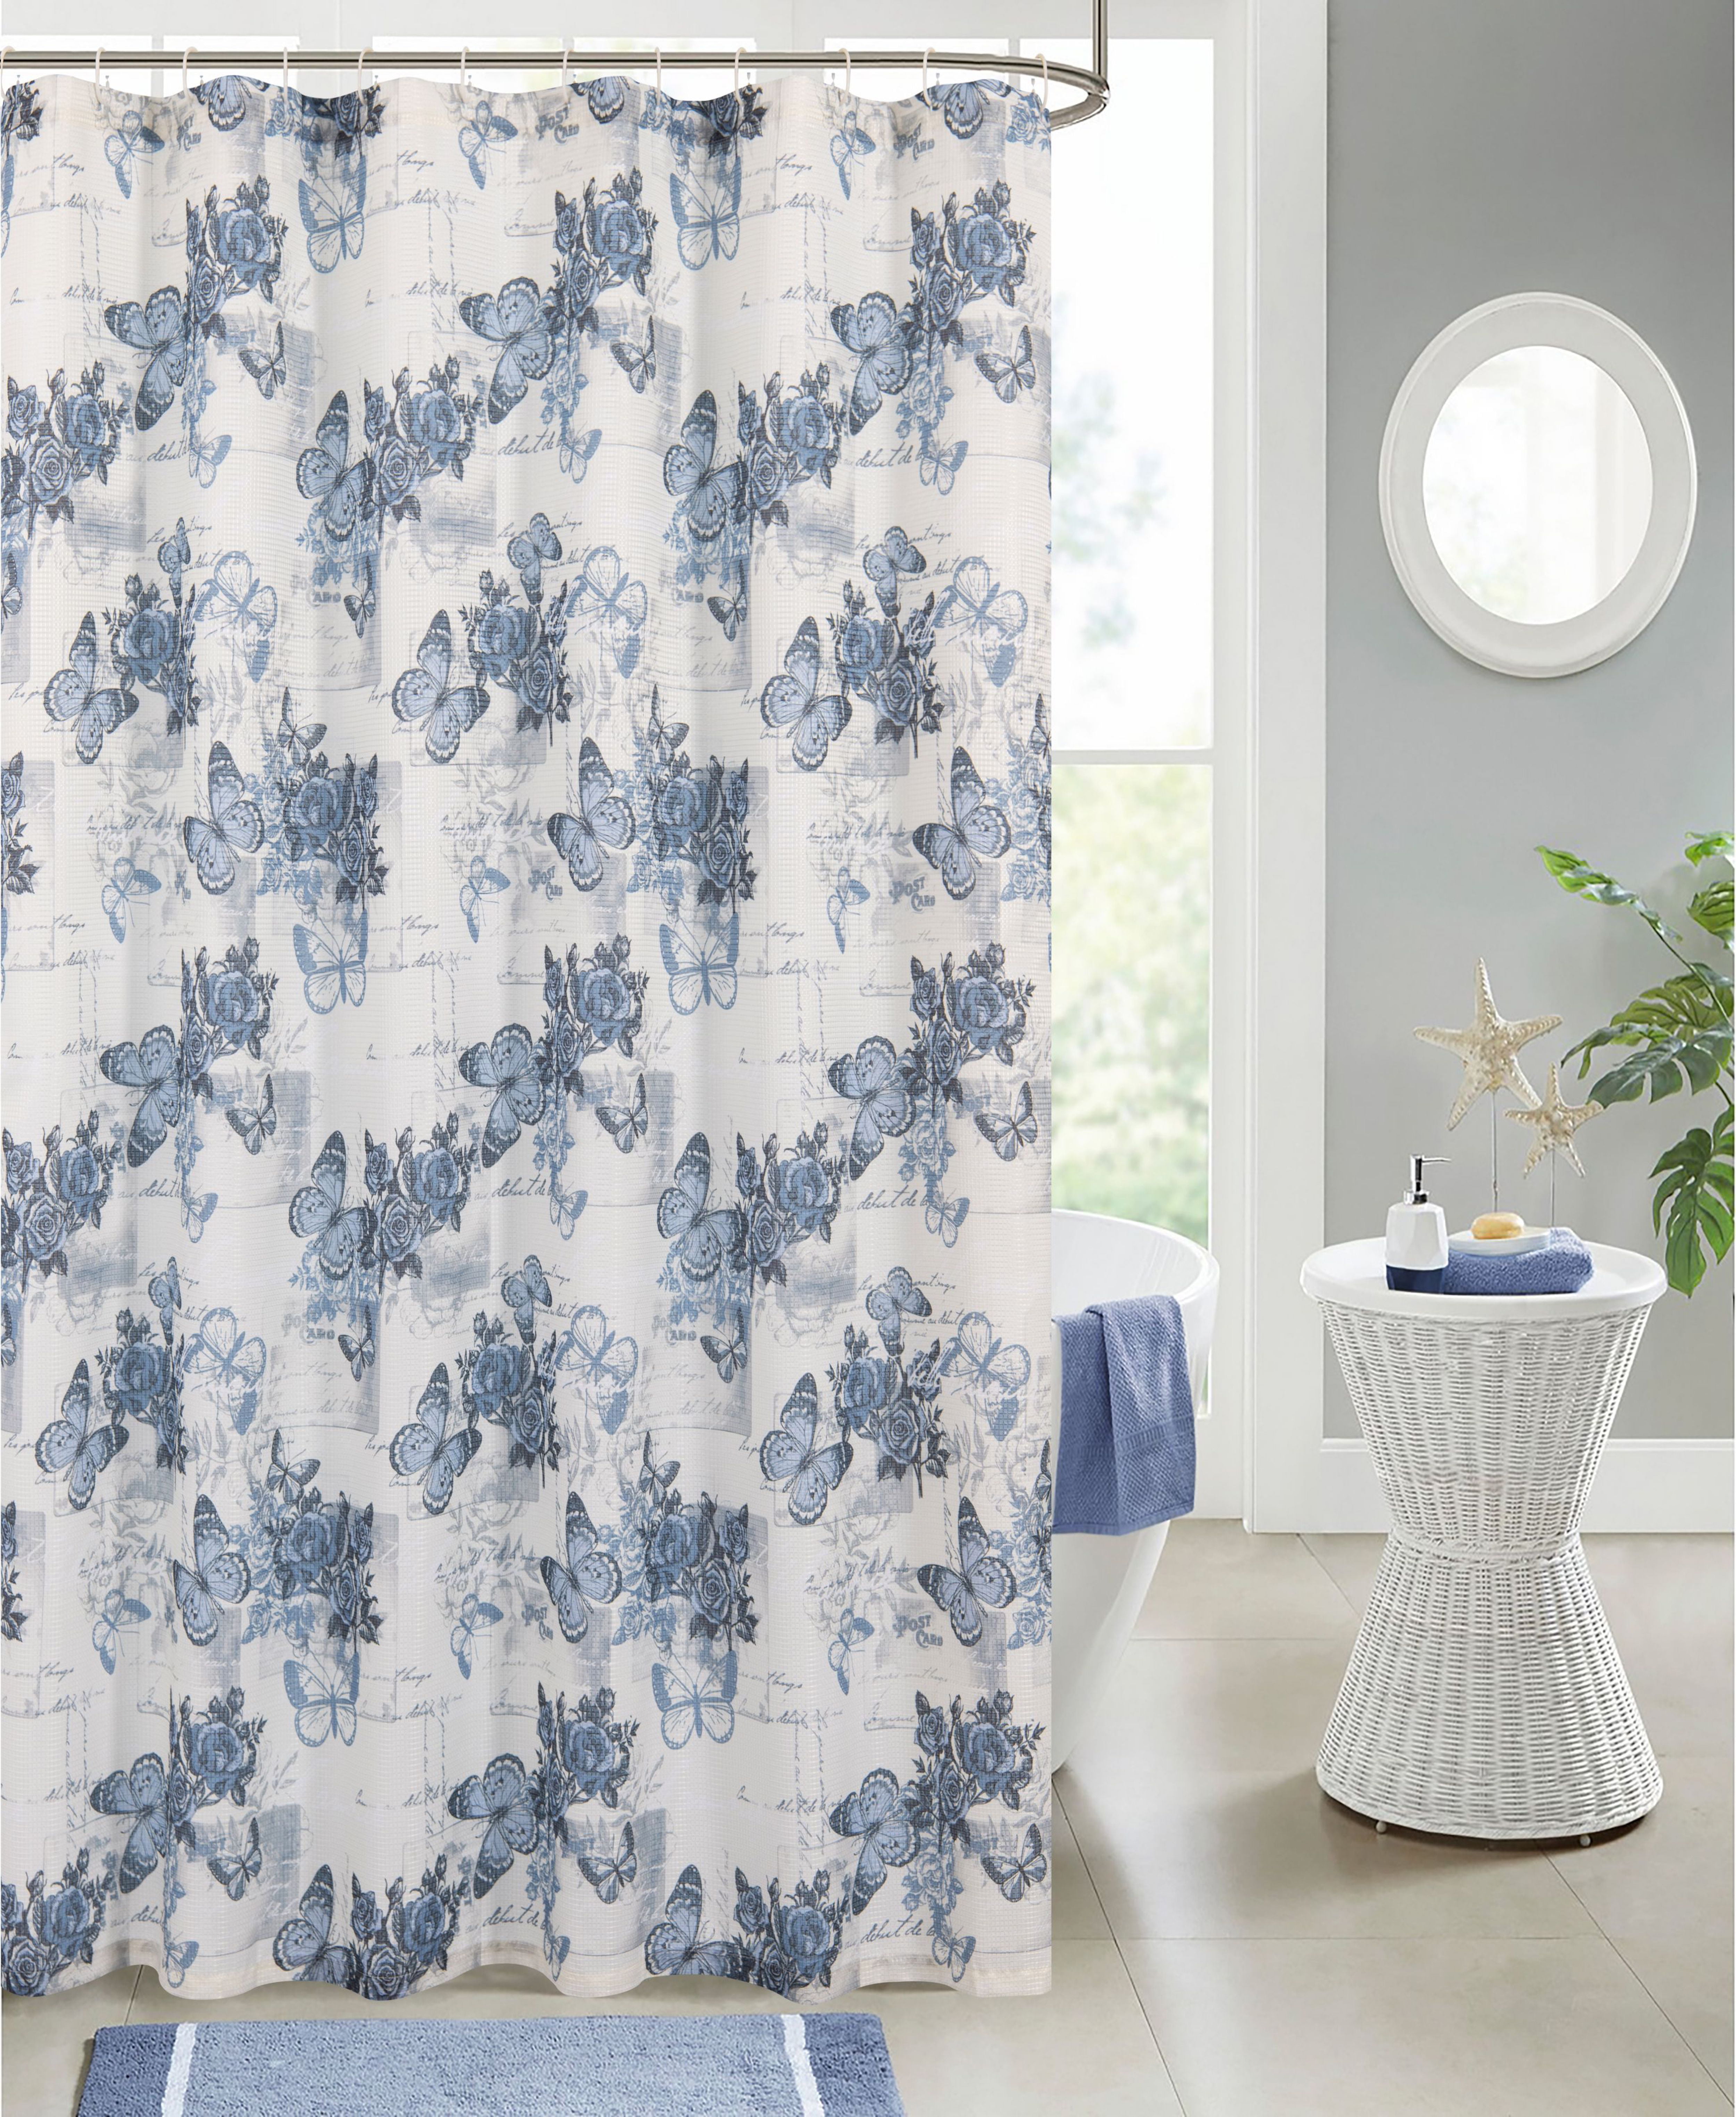 Bathroom Shower Curtain Decor Set Butterfly Design Blue Bath Curtains 12 Hooks 